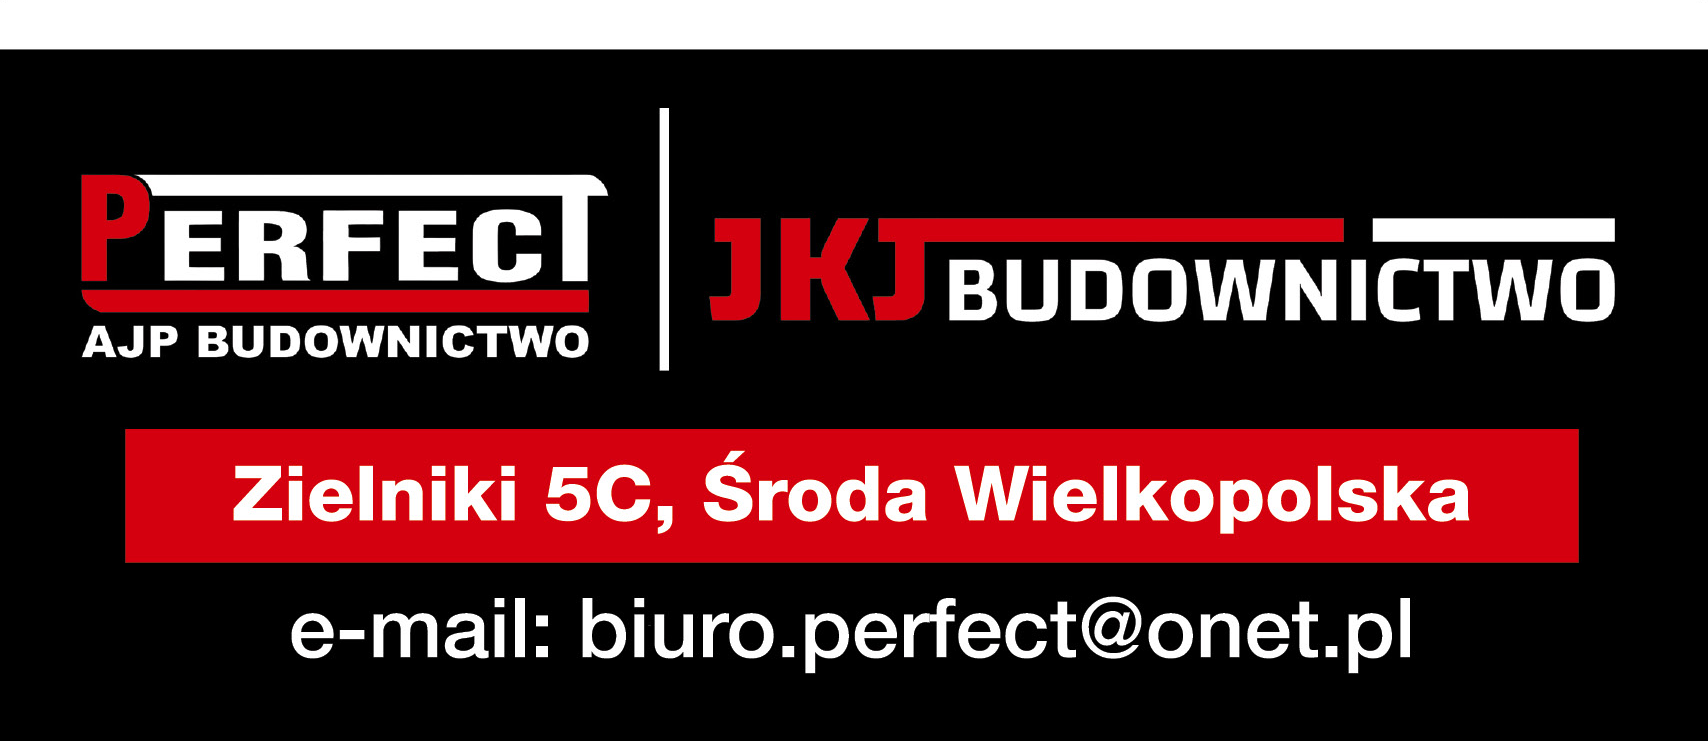 JKJ BUDOWNICTWO Zielniki Perfect AJP Budownictwo